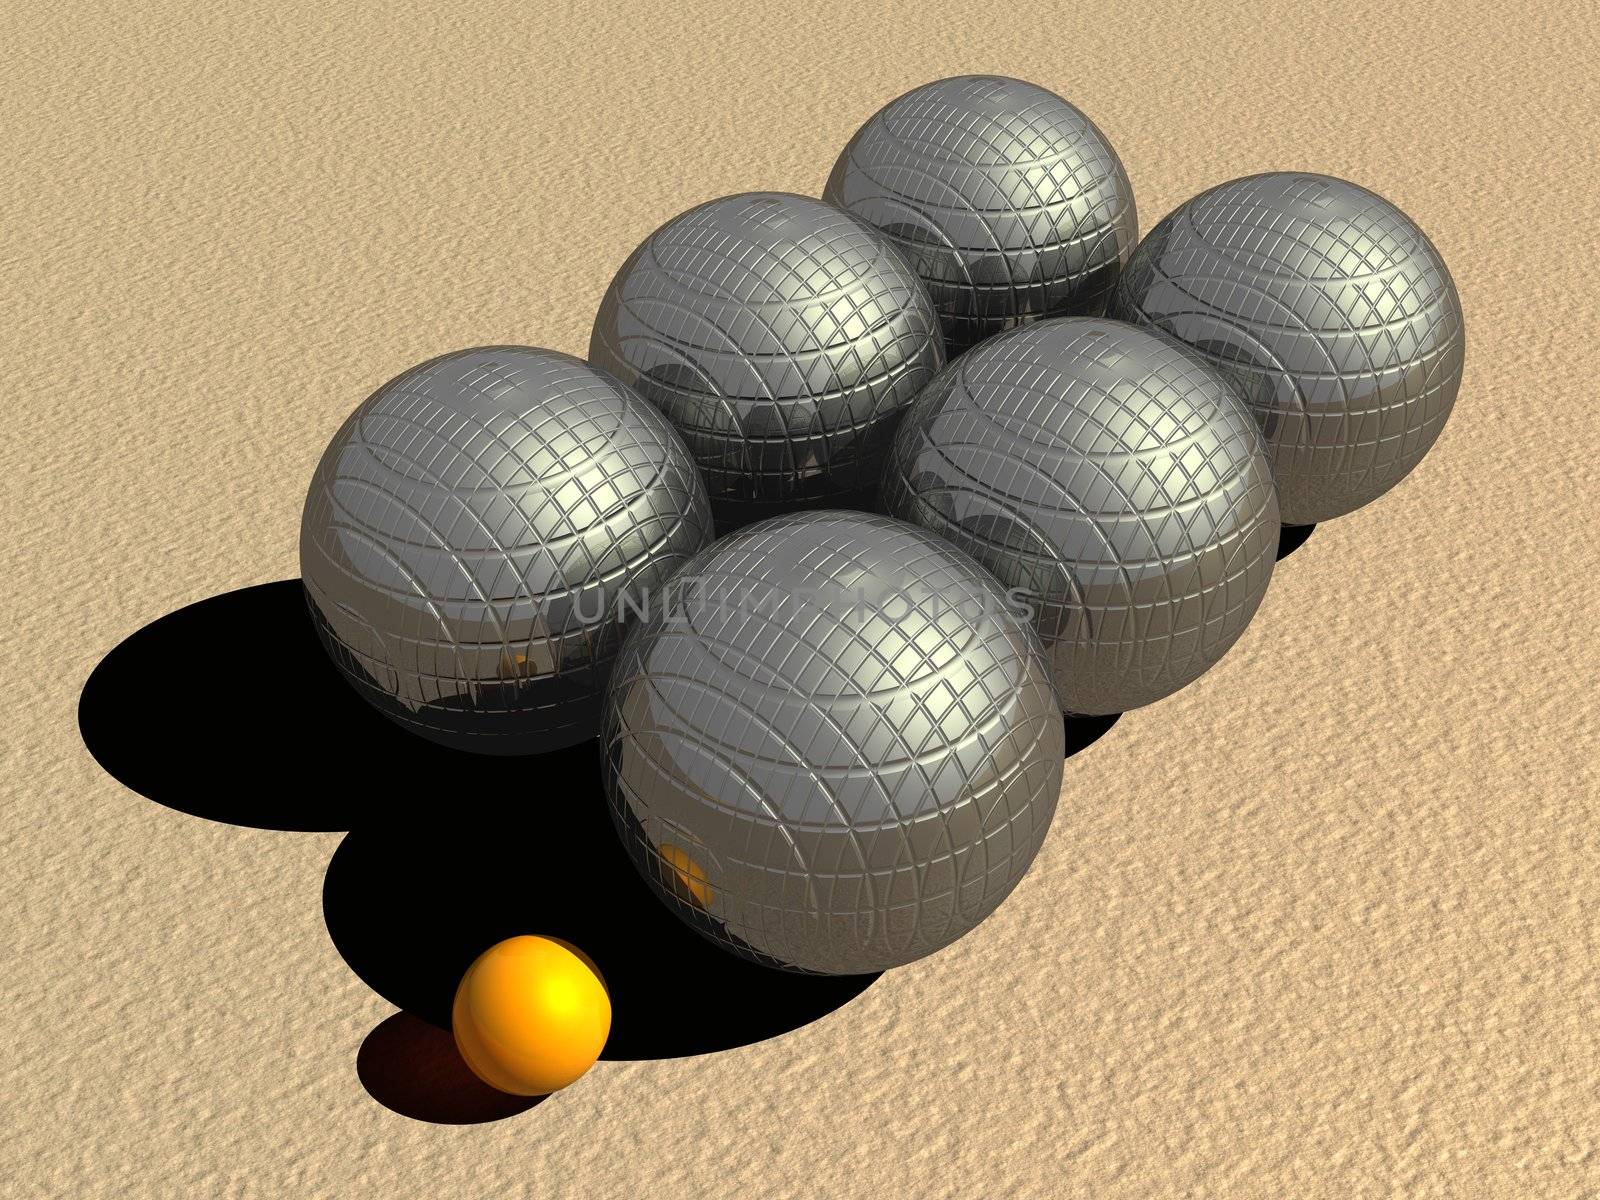 Six big metallic petanque balls and a small orange jack on the sand